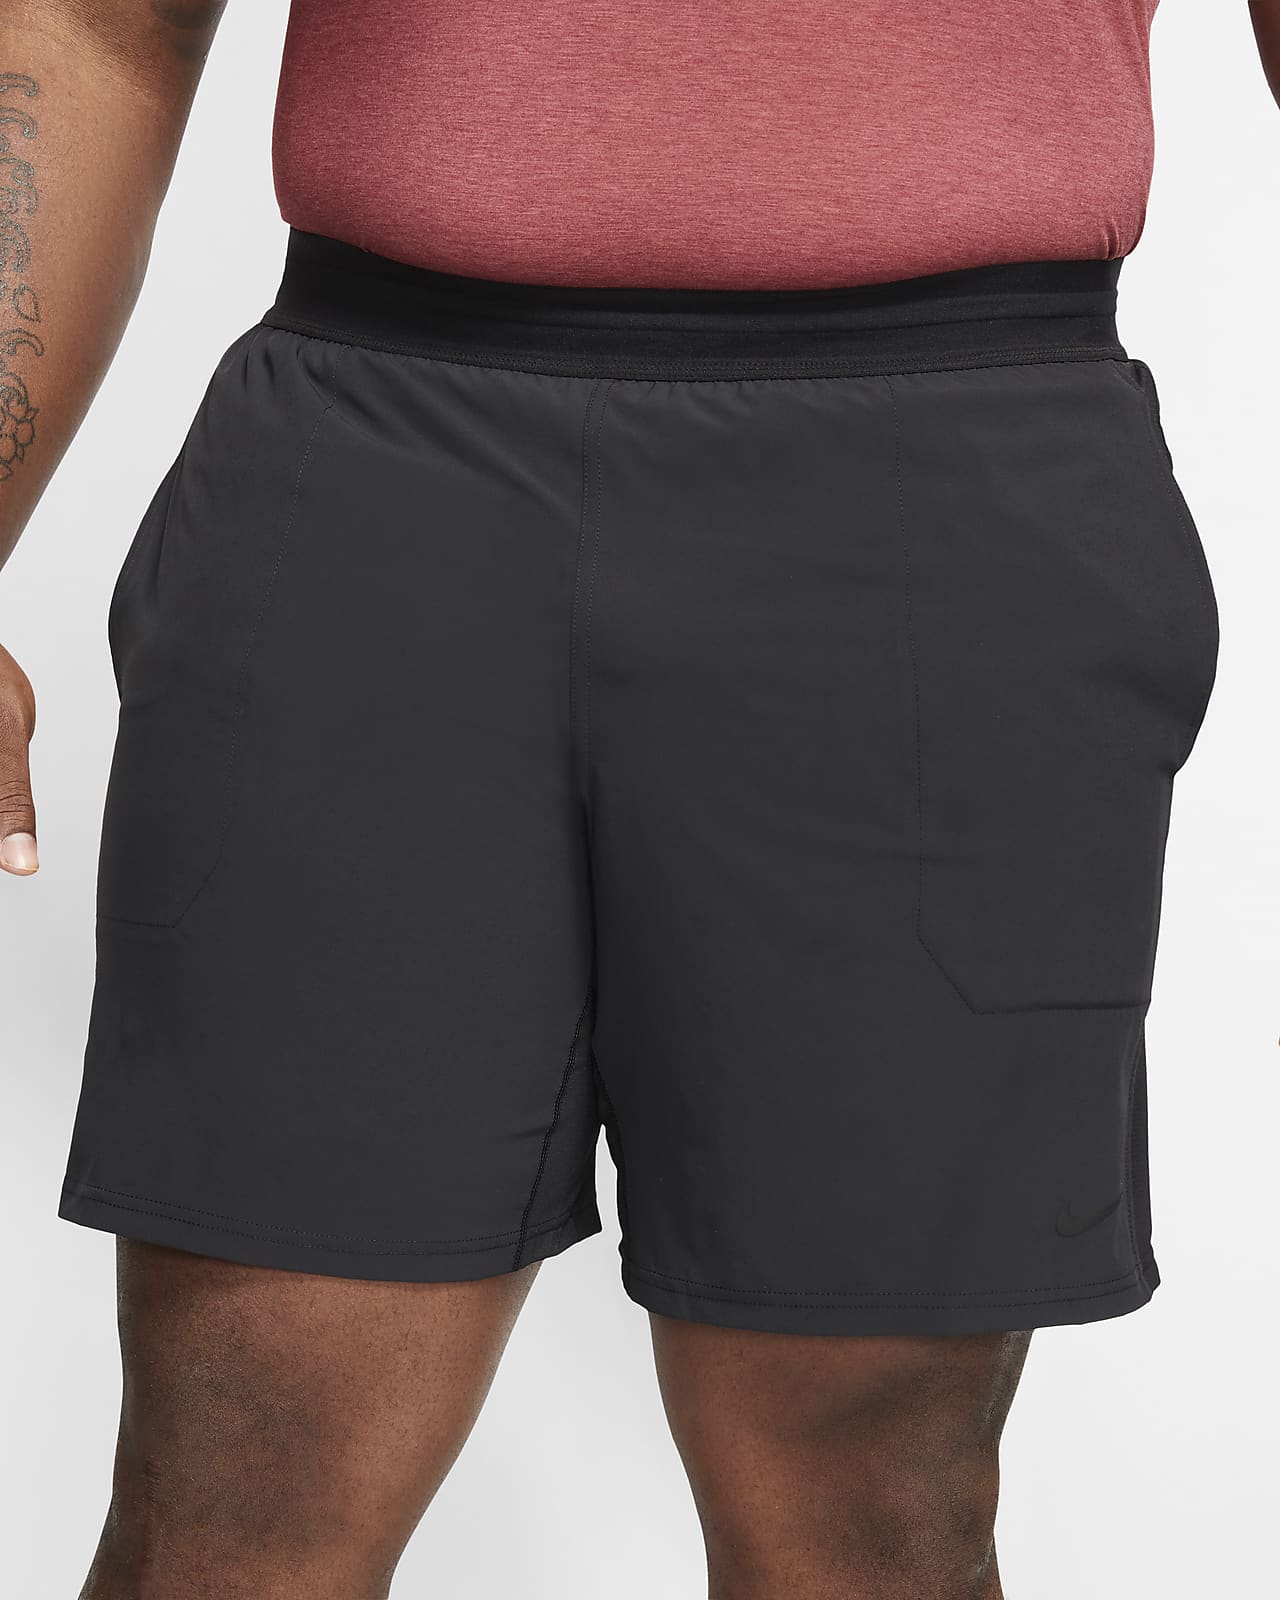 nike training flex shorts in black